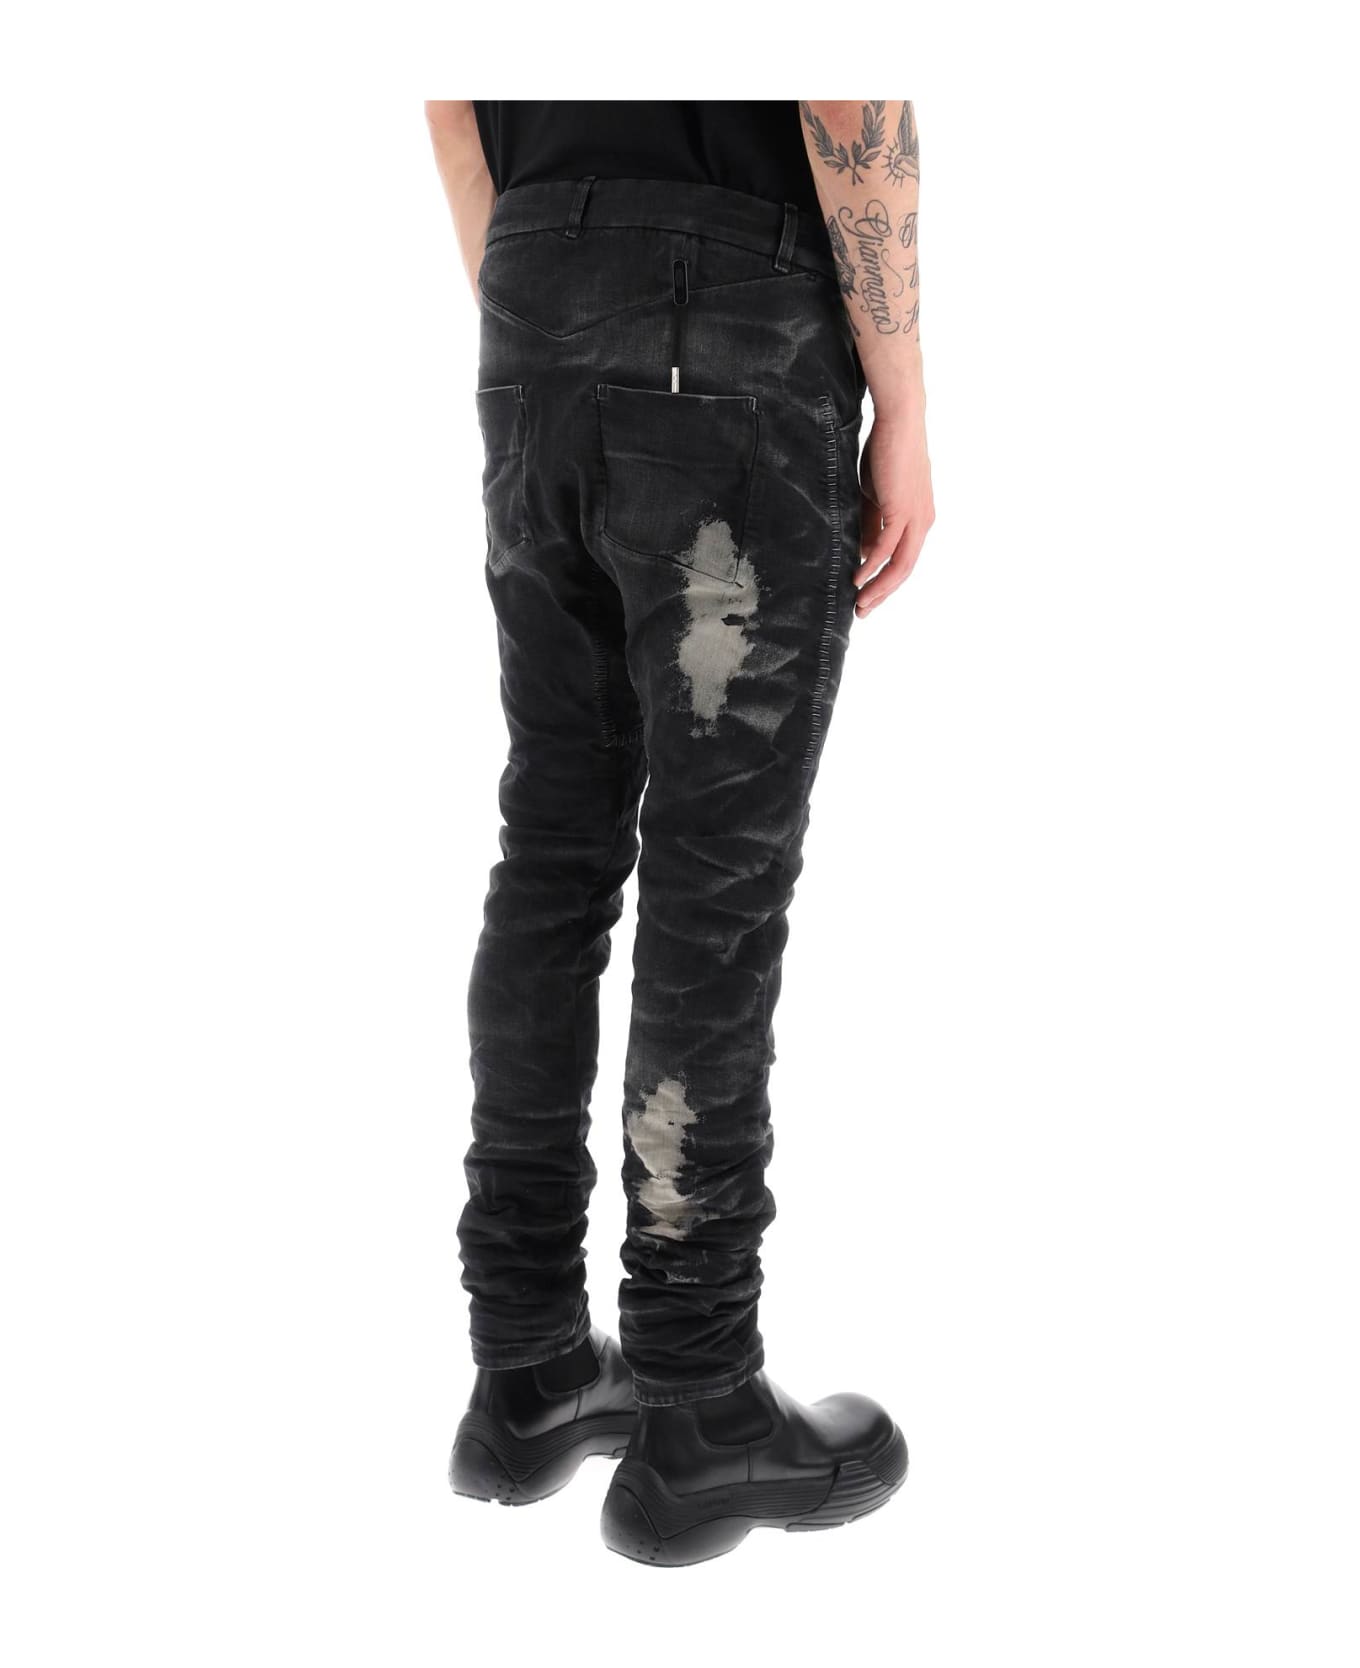 Boris Bidjan Saberi Stone Washed Jeans With Used Effect - BLACK DENIM (Black) デニム